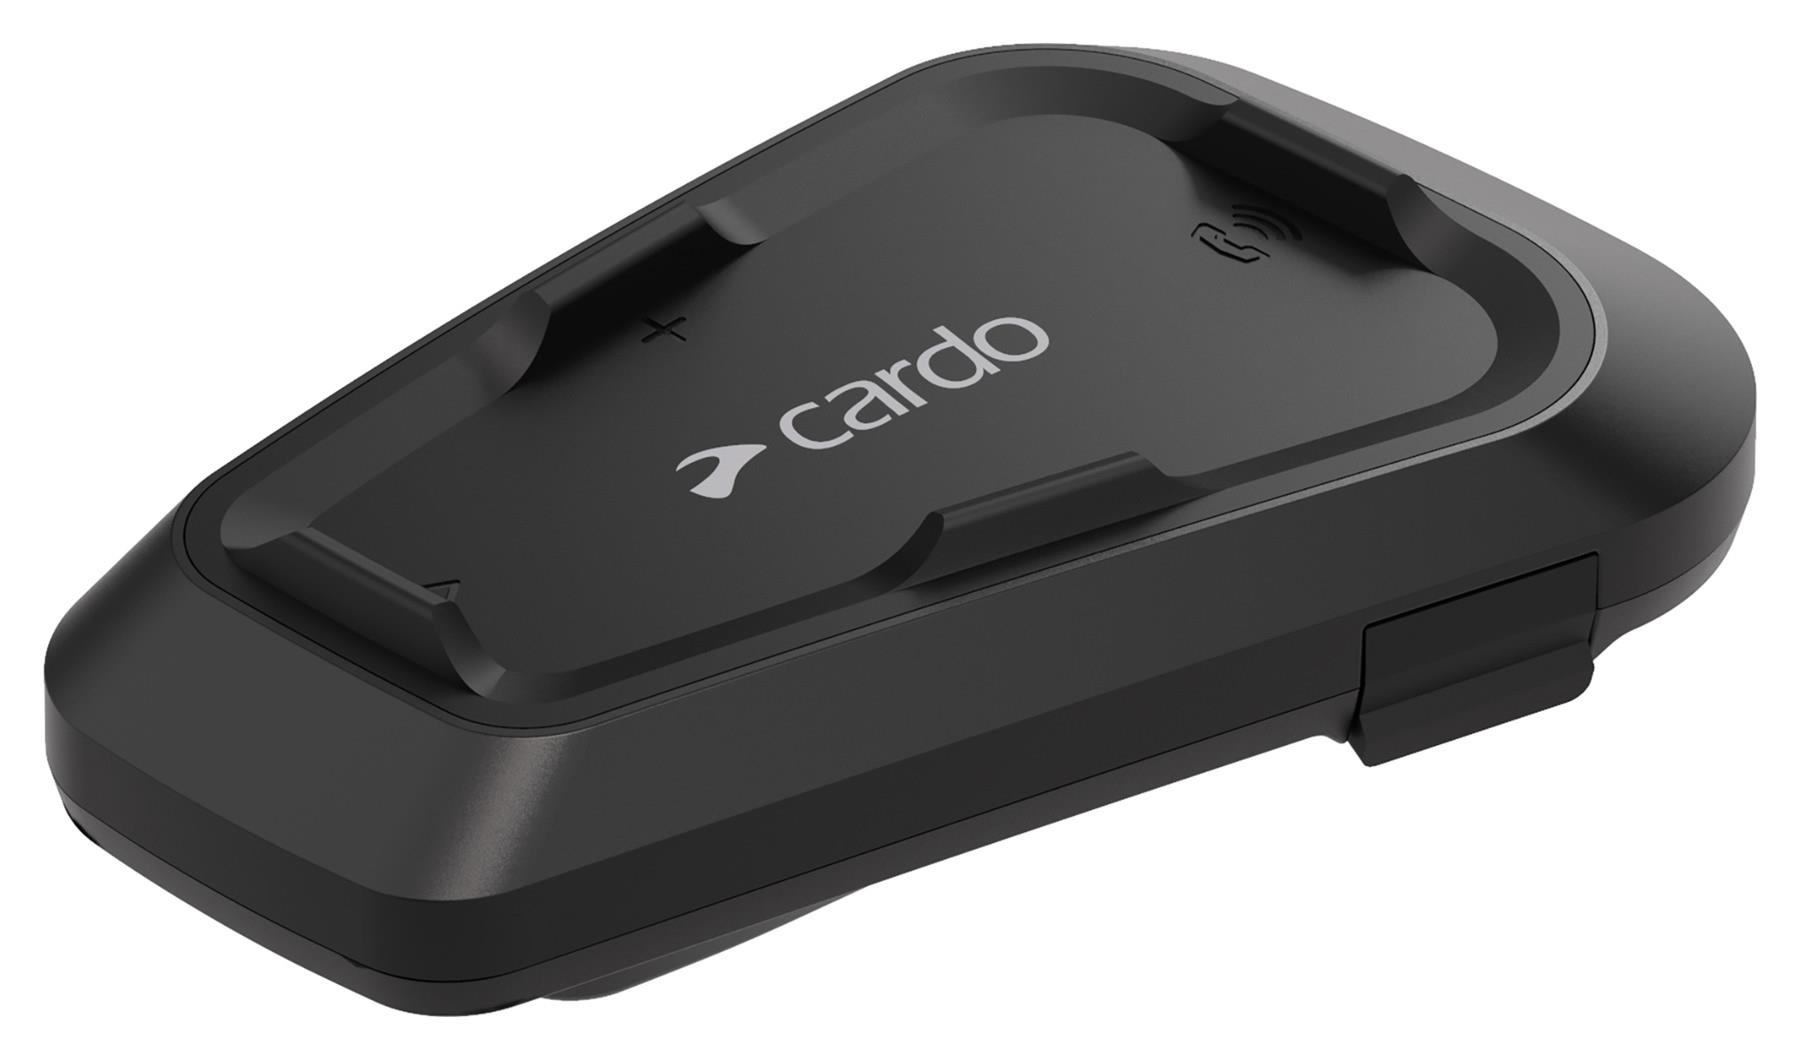 Cardo Spirit HD Communication Device